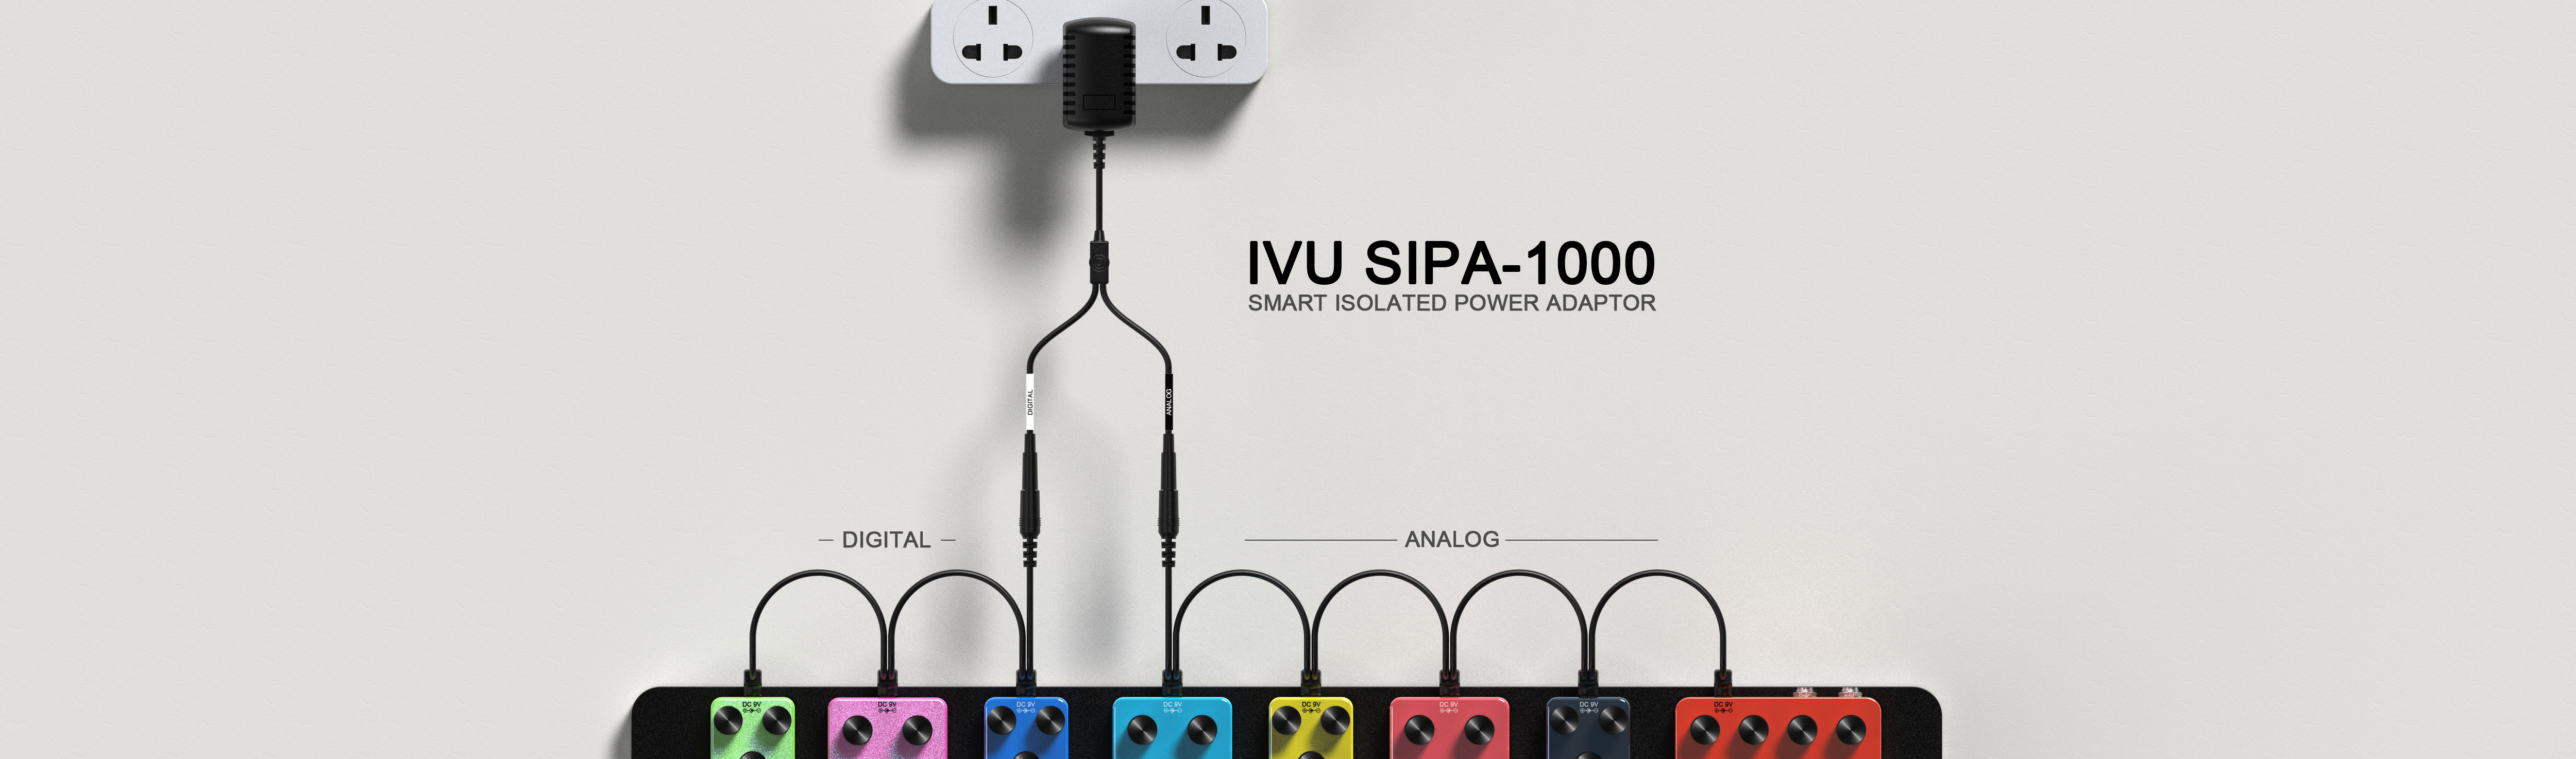 IVU SIPA-1000 (Smart Isolated Power Adaptor)